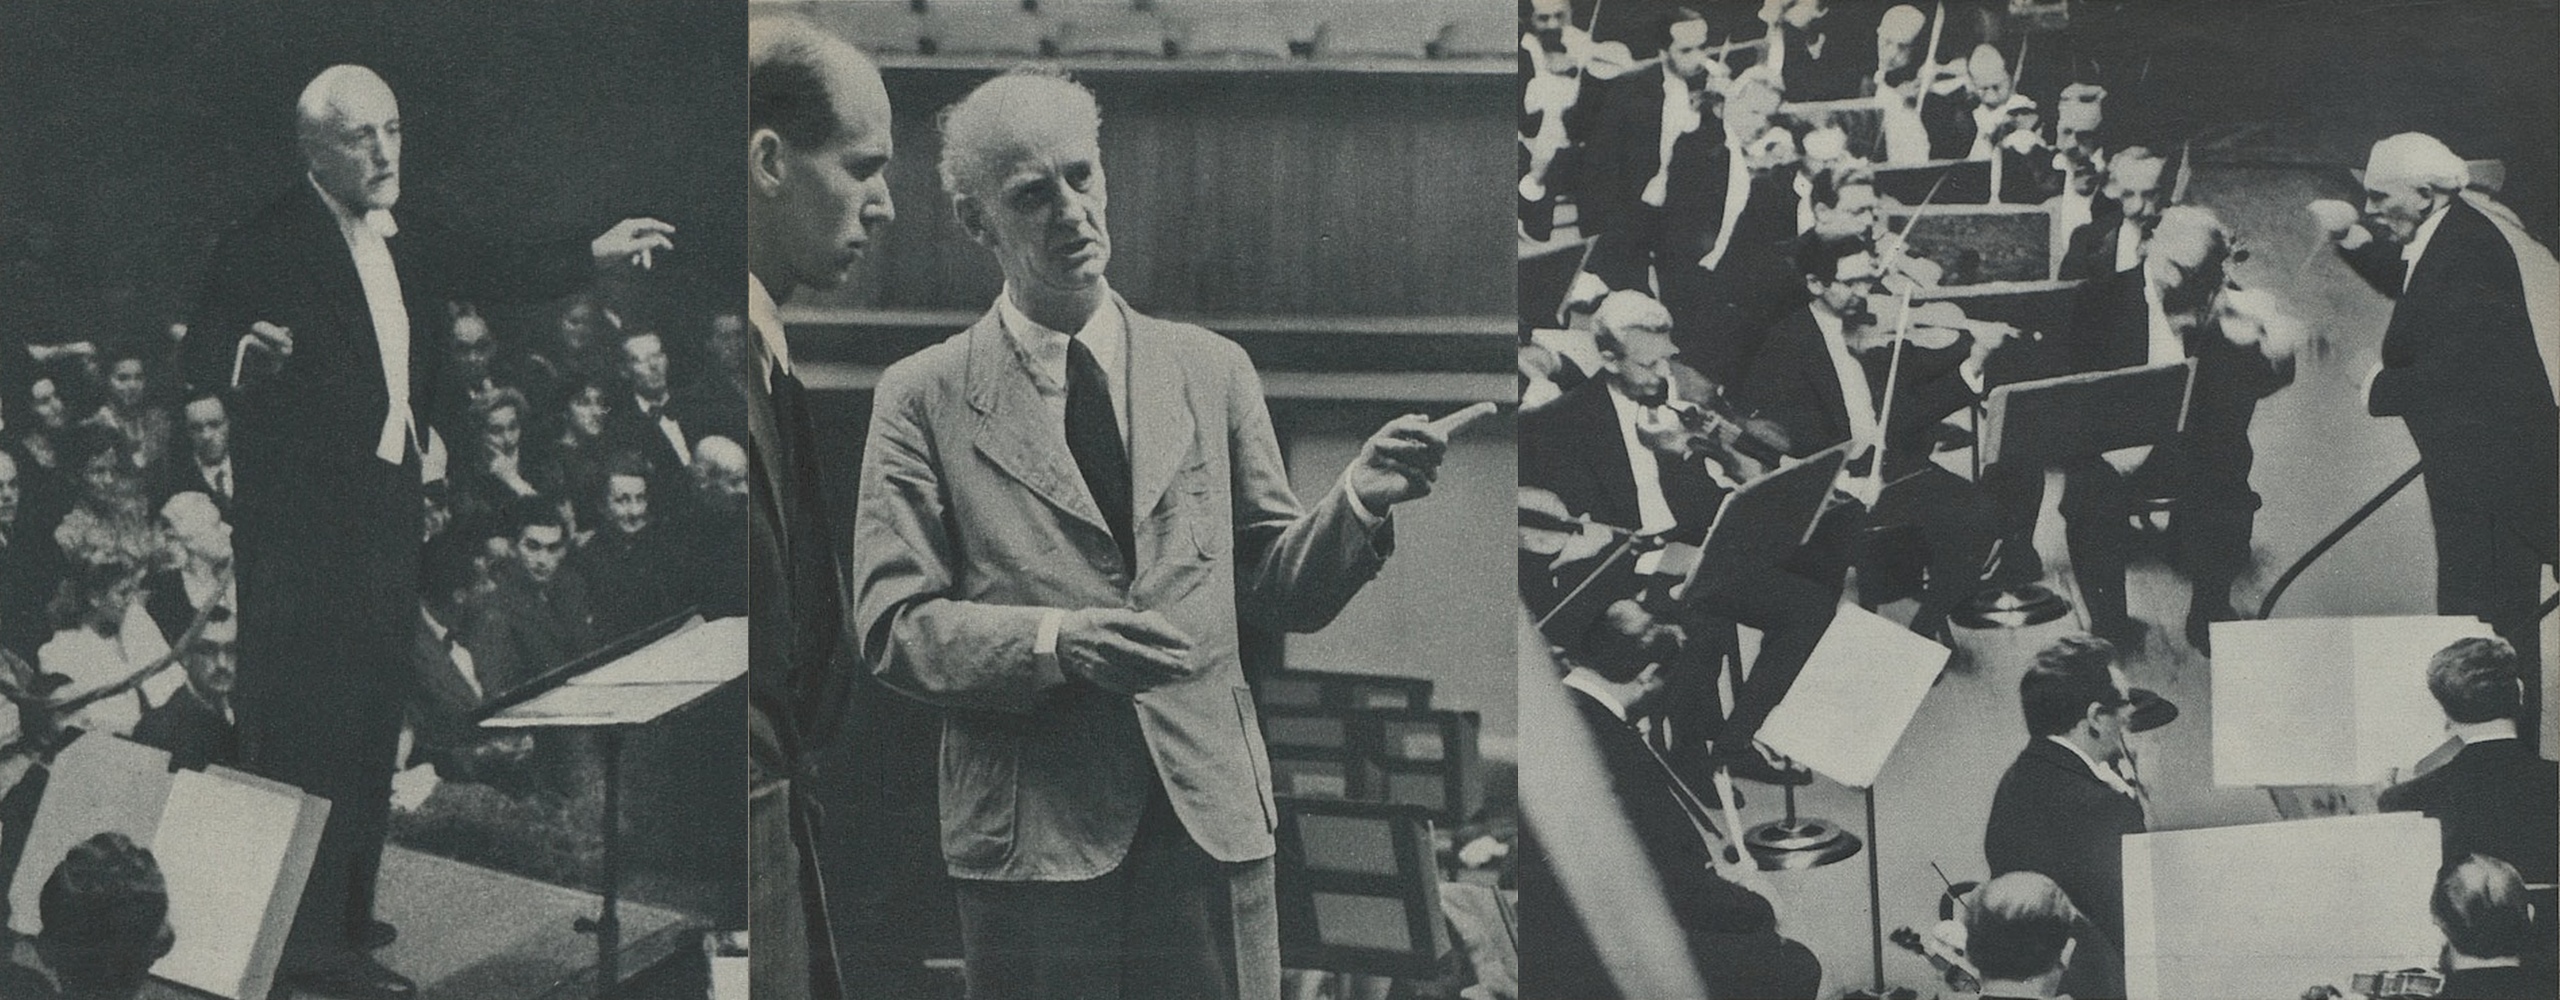 Ernest ANSERMET, Wilhelm FURTWÄNGLER et Arturo TOSCANINI, Semaines Musicales Internationales de LUCERNE, 1938